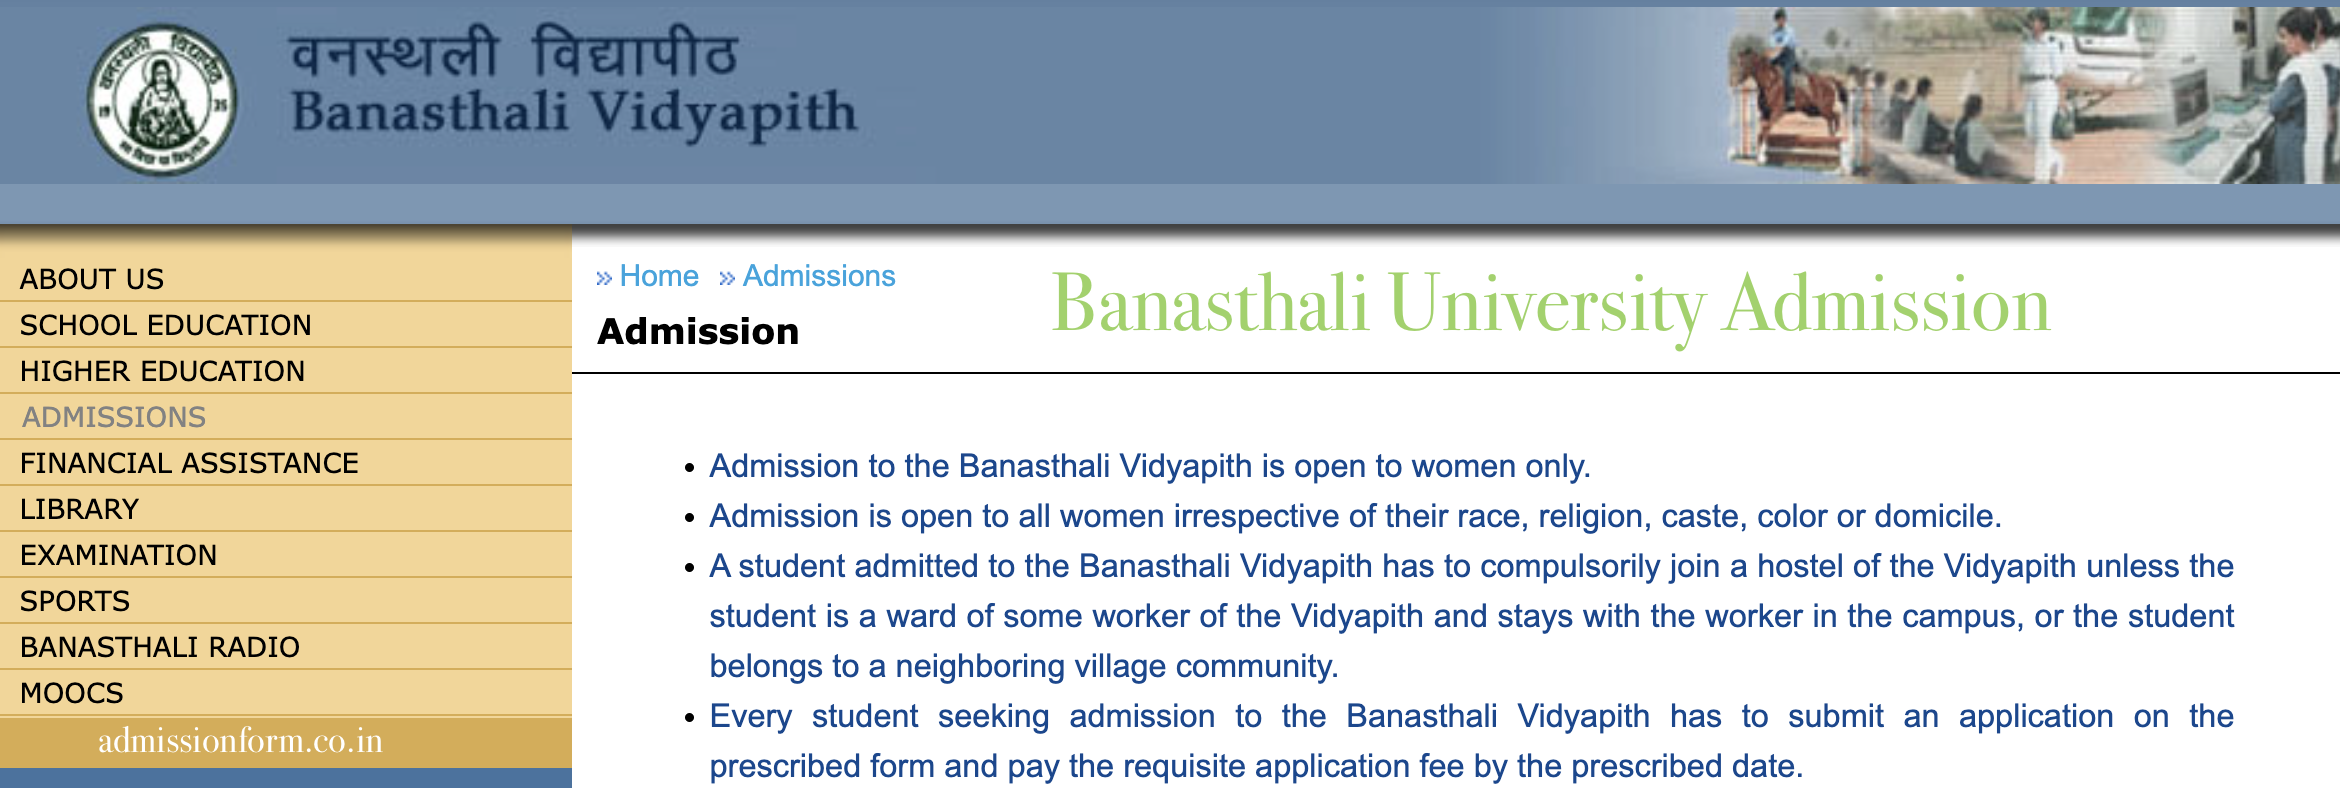 Banasthali University Admission